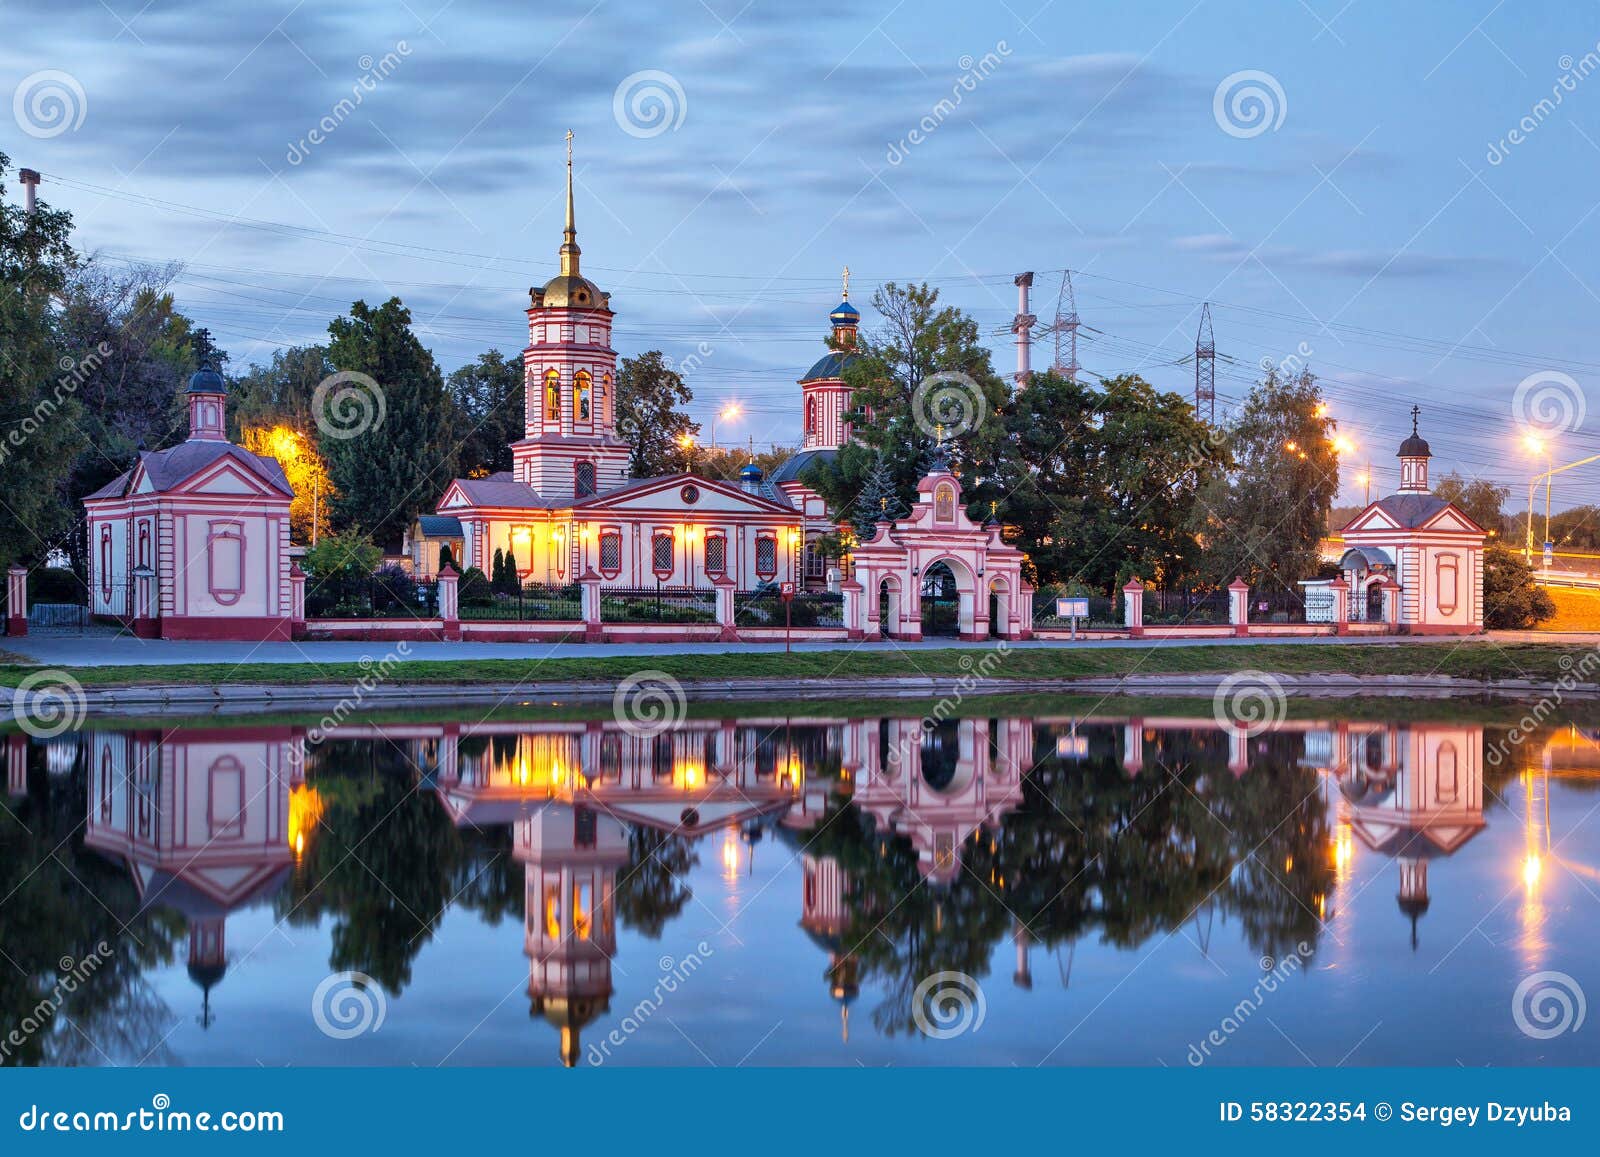 historical altufevo estate, moscow, russia